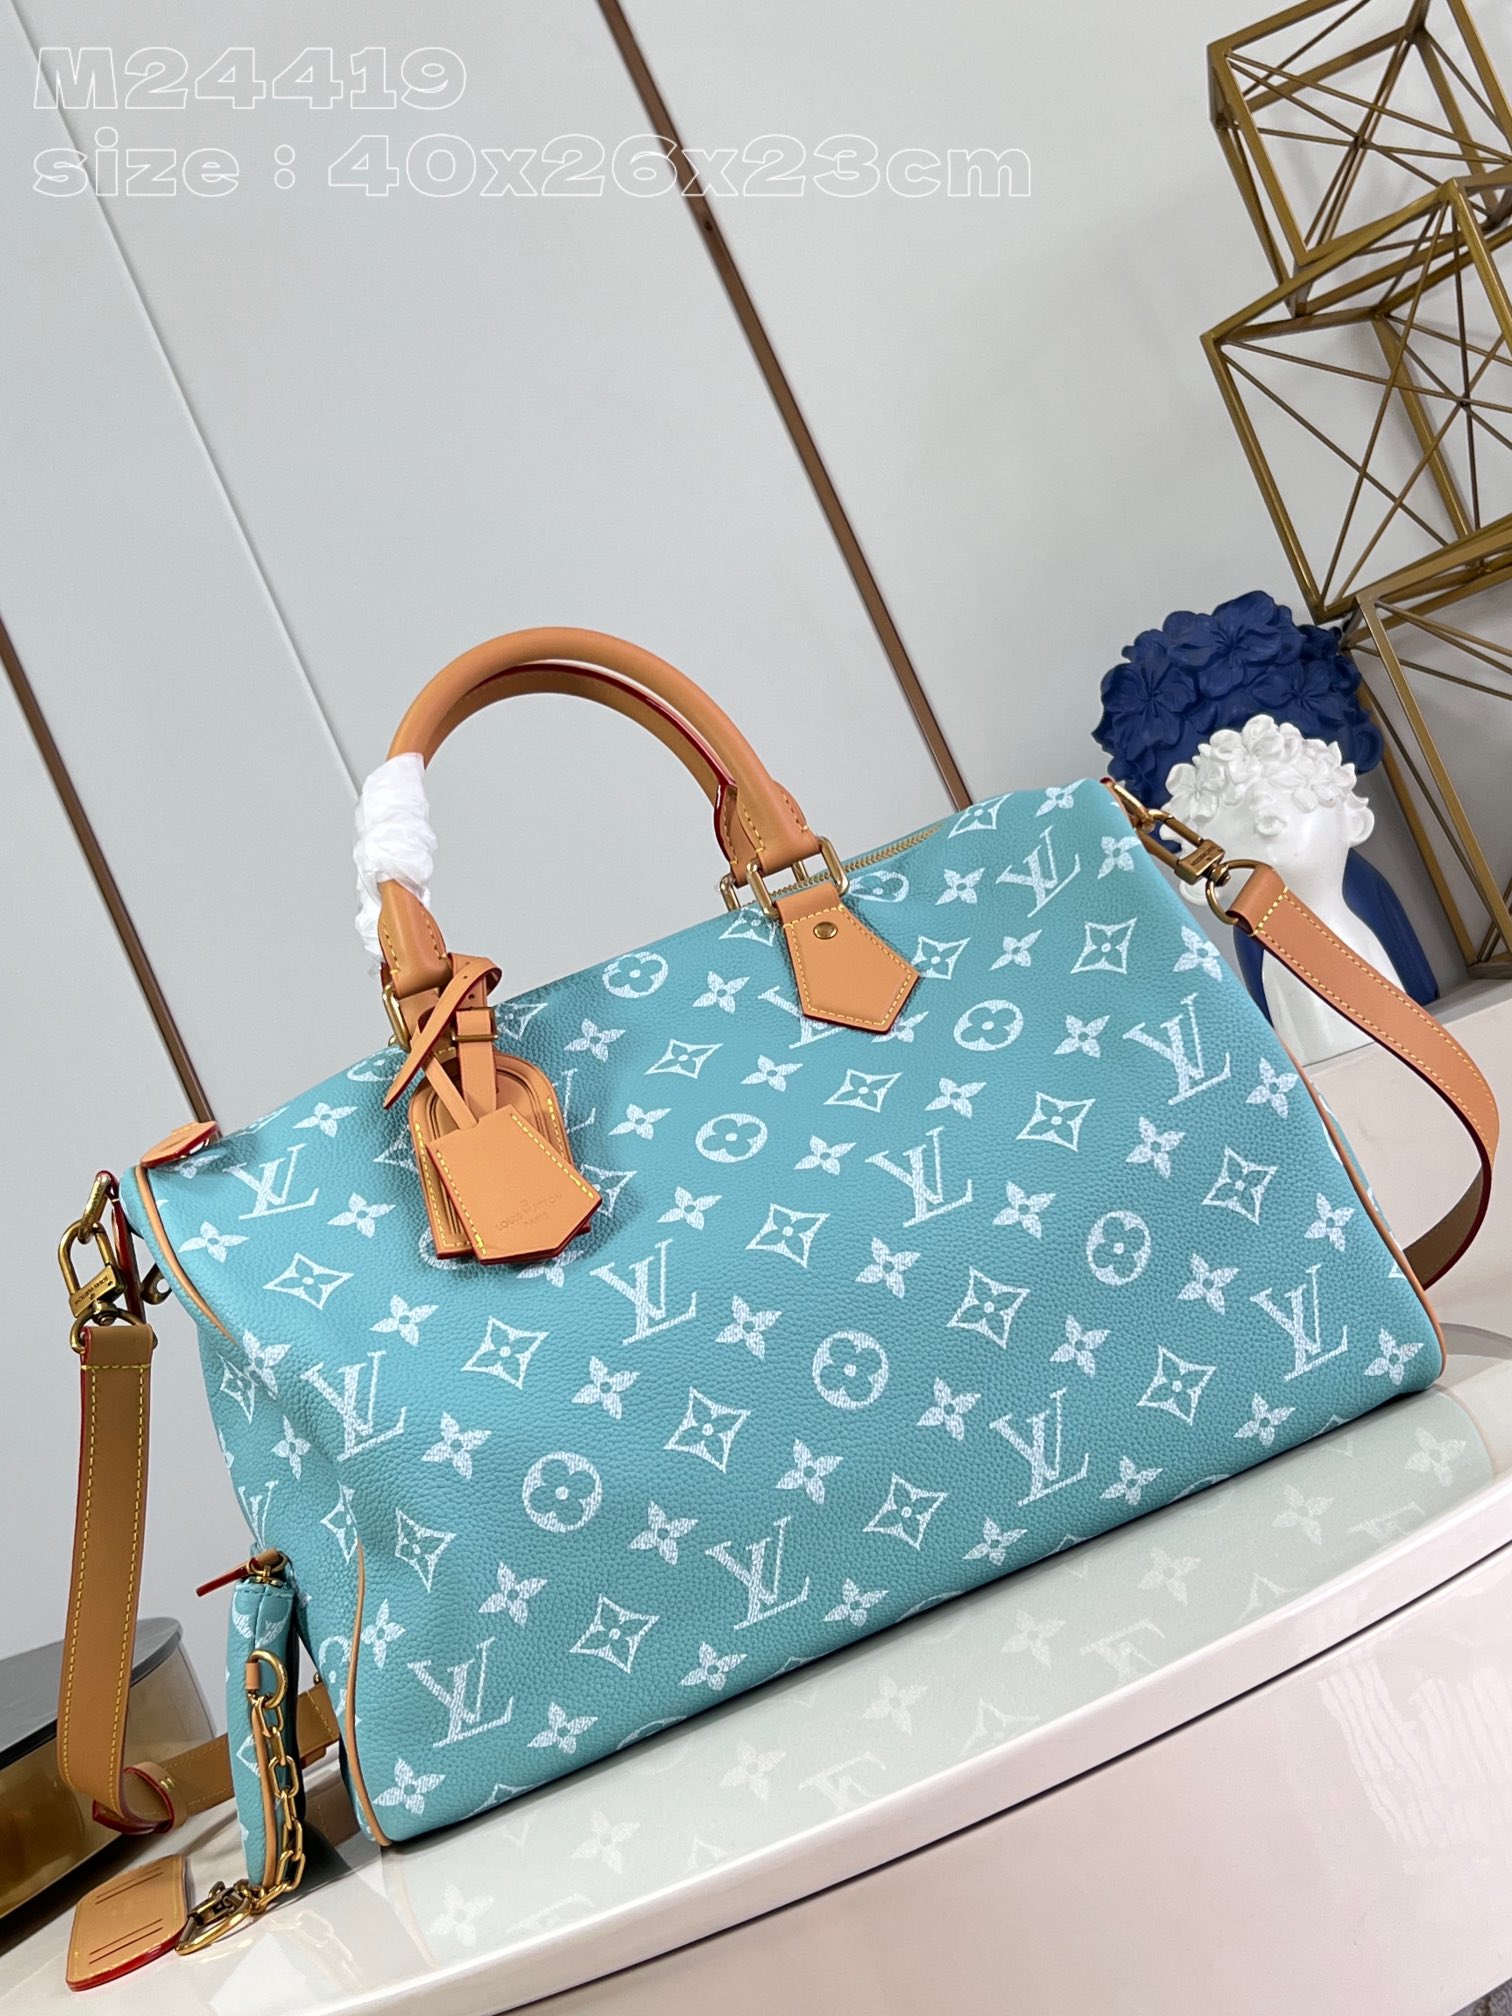 Louis Vuitton LV Speedy Bags Handbags Printing Canvas Cowhide Sheepskin M24419